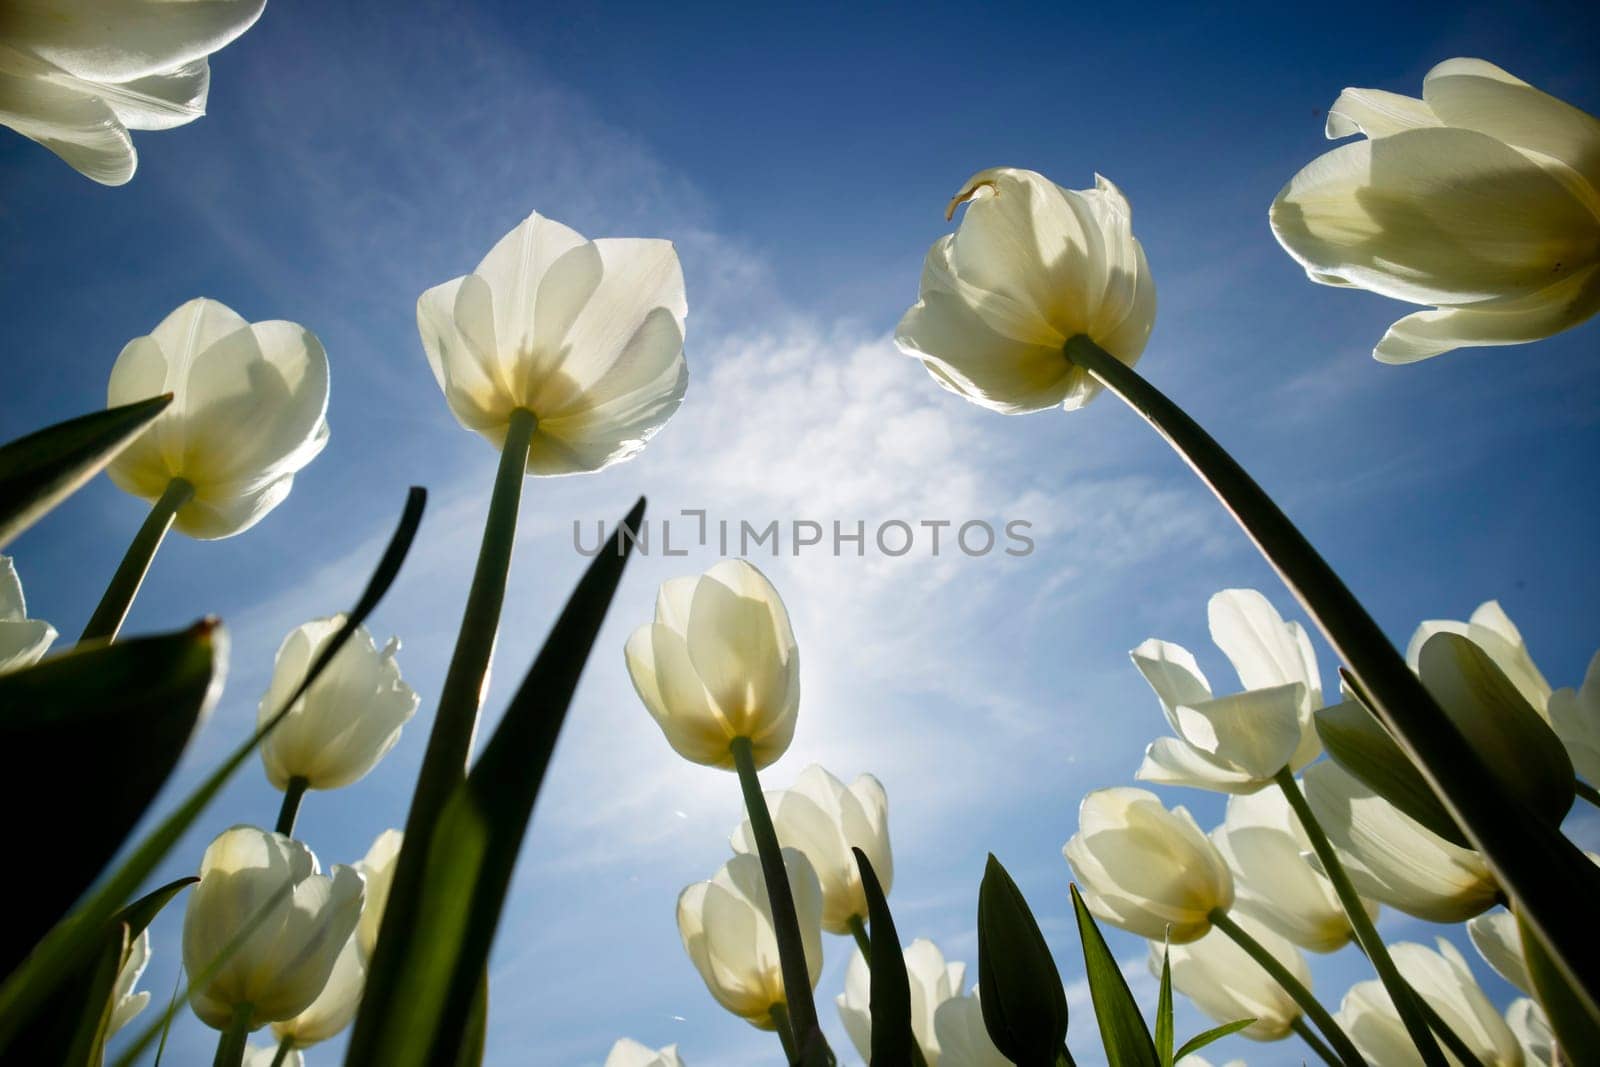 Photographic documentation of a white tulip cultivation by fotografiche.eu